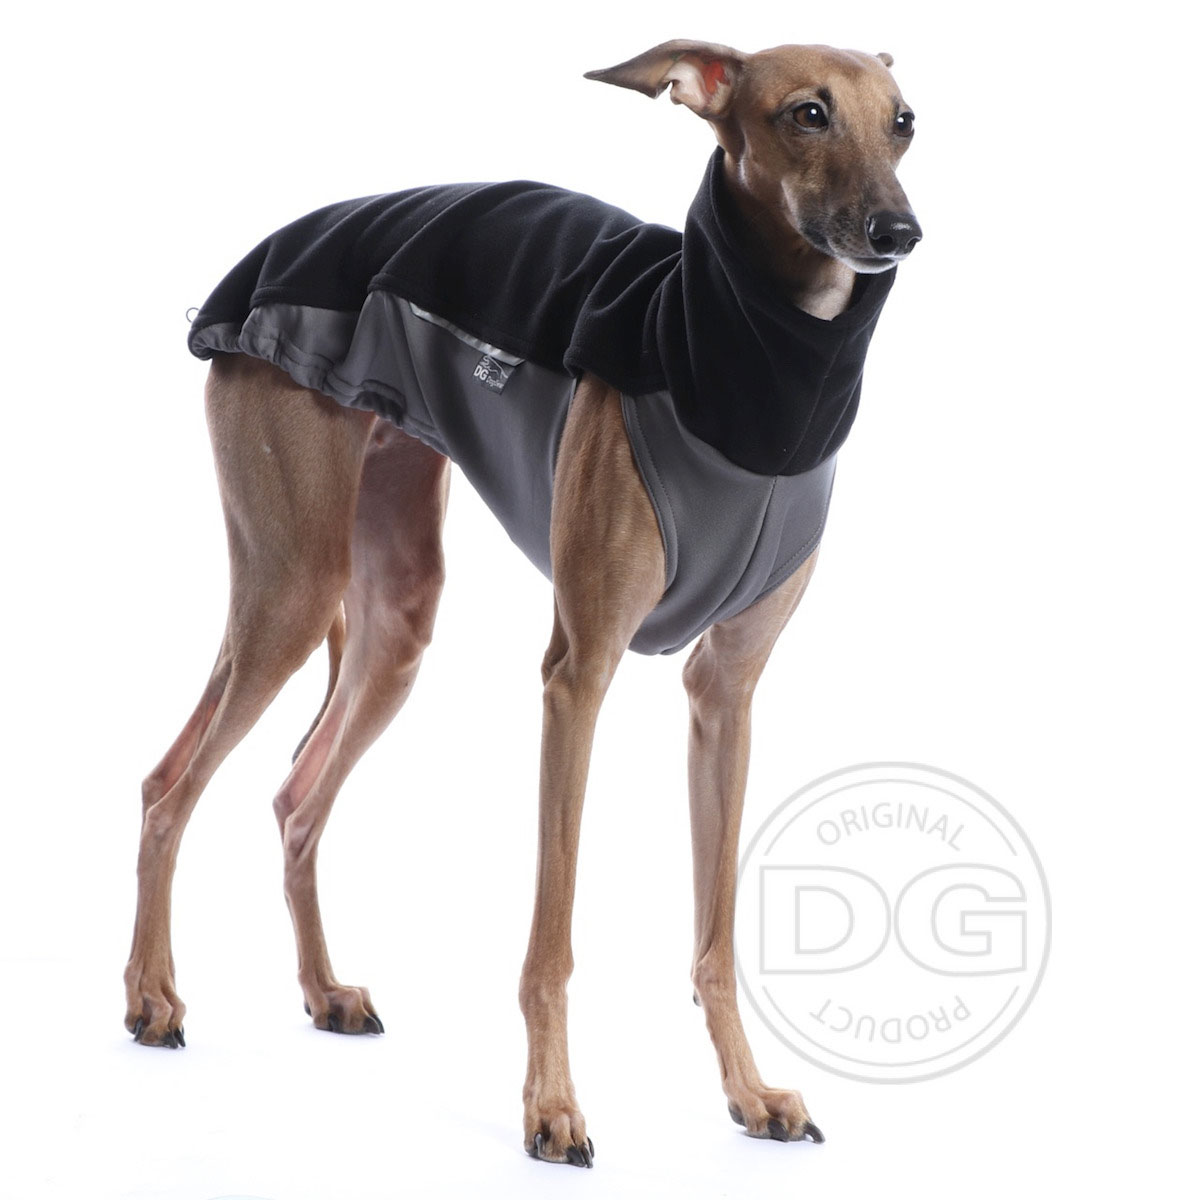 Italian greyhound jacket DG OUTDOOR TOP EXTREME - DGDogGear image 2